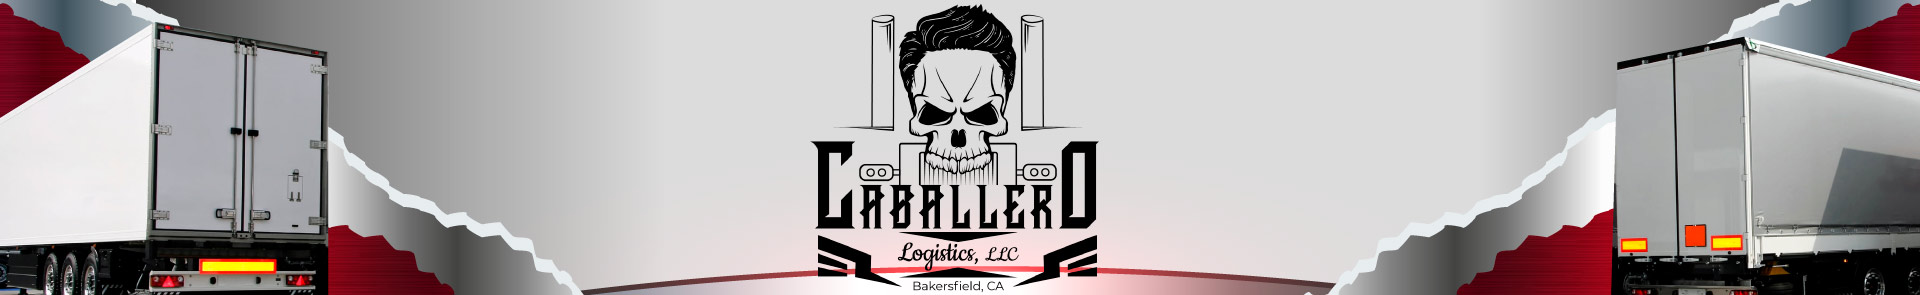 Header - Caballero's Logistics, LLC